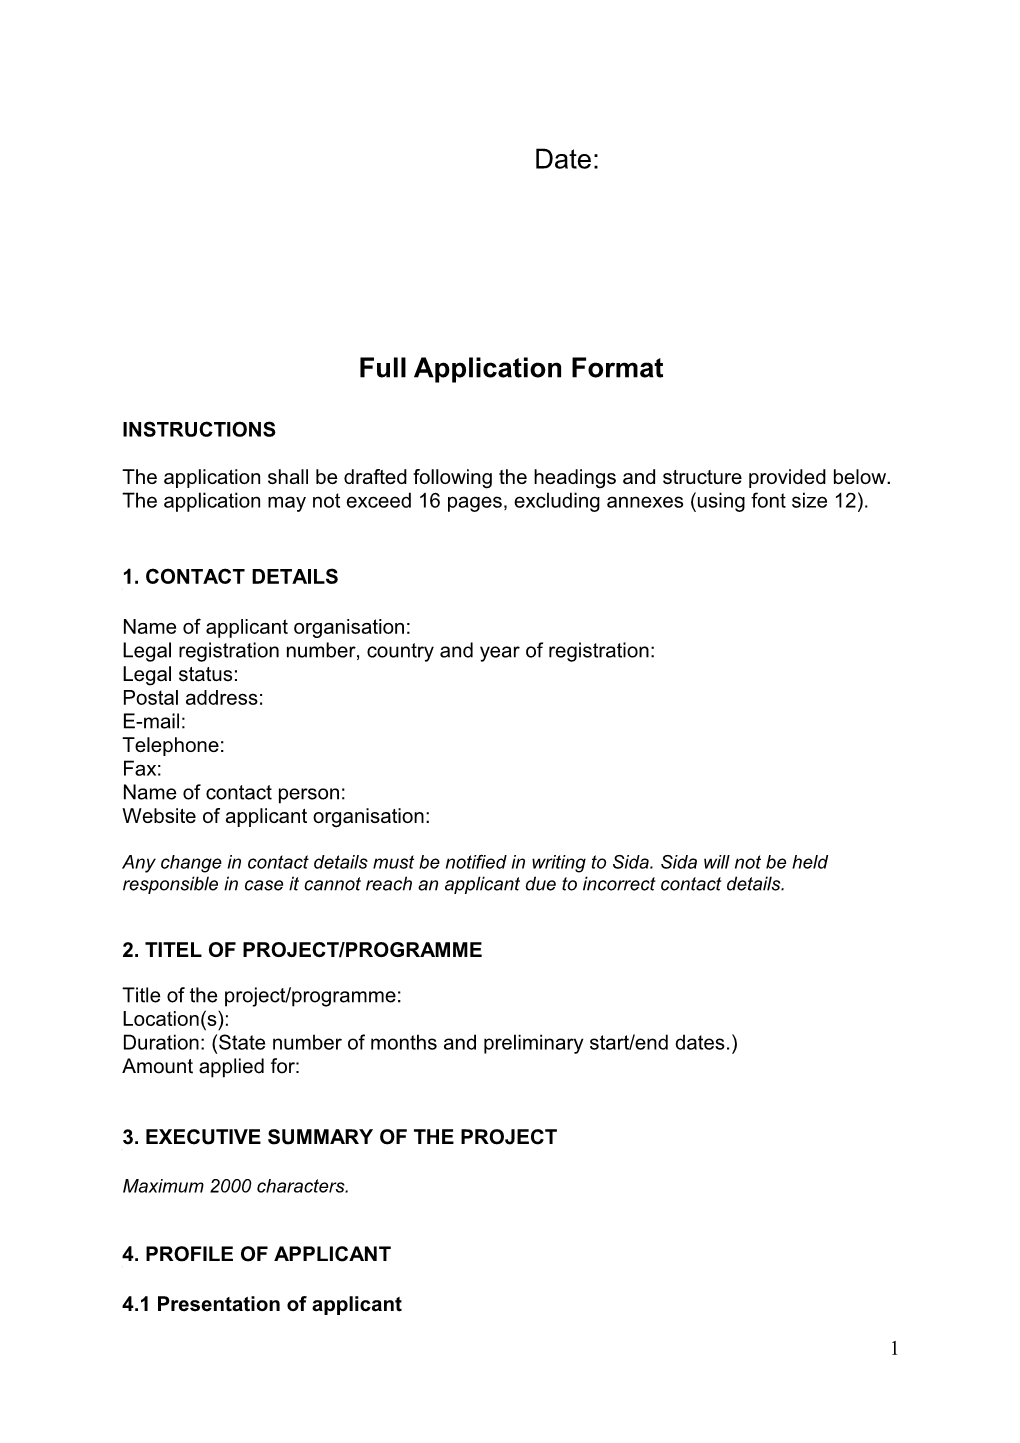 Full Application Form DEMO 1